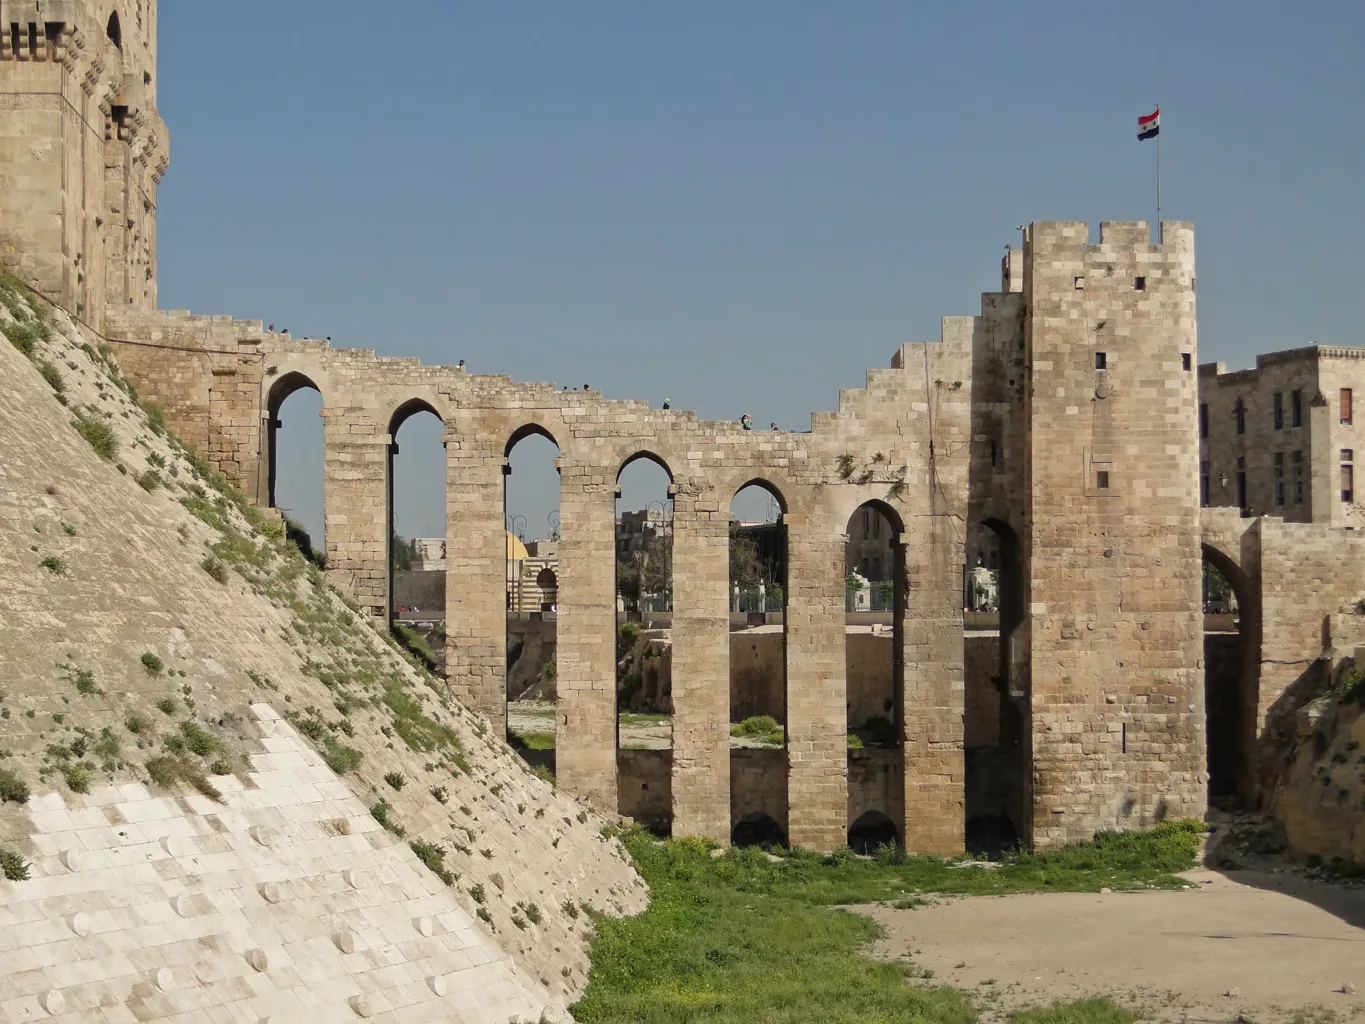 The Citadel of Aleppo 8